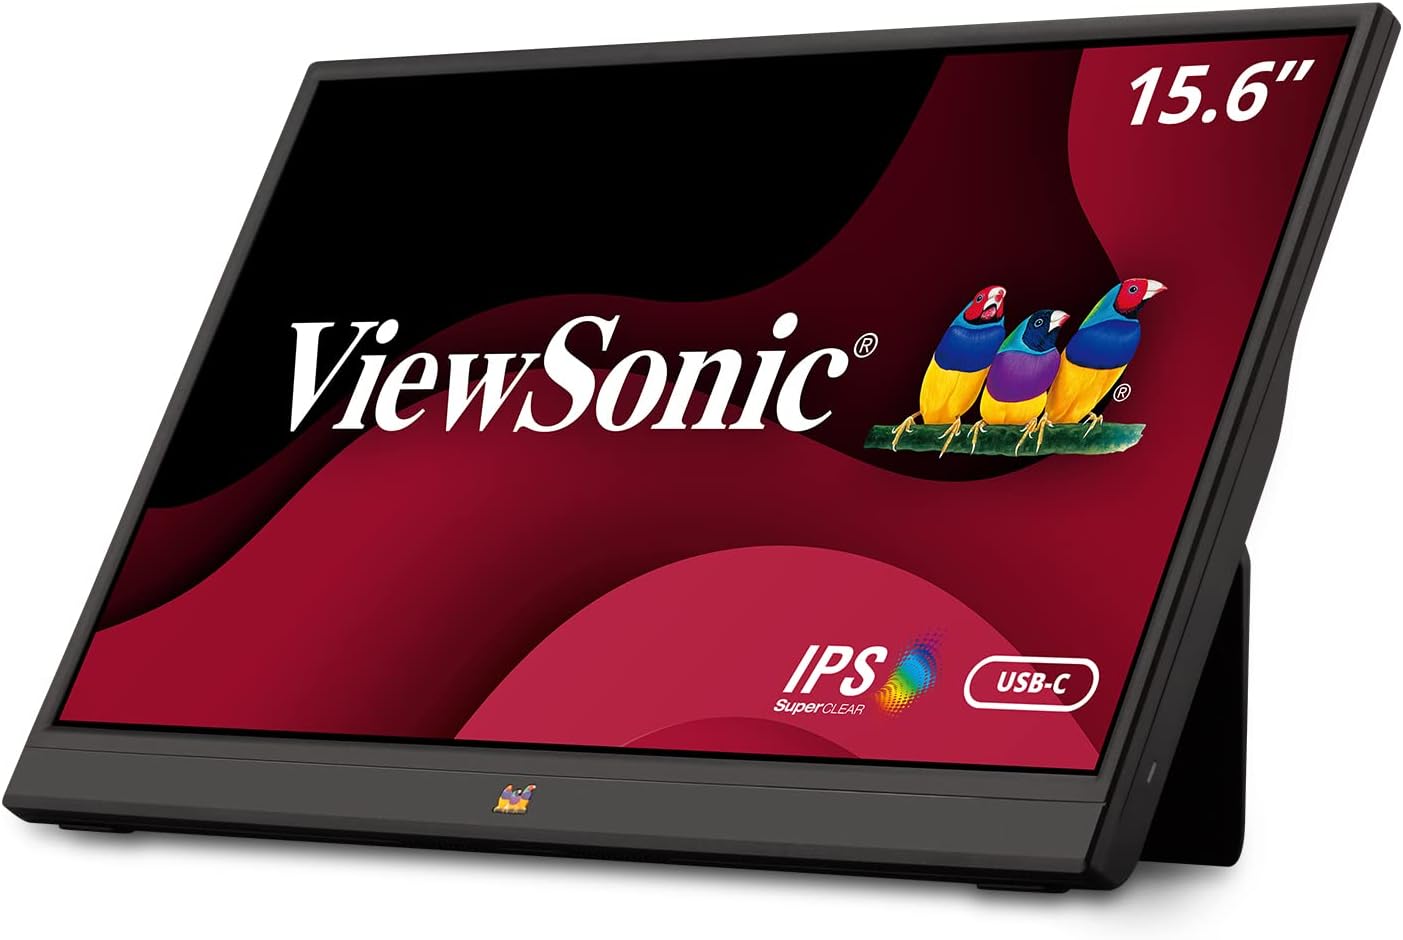 15.6" ViewSonic VA1655 1080p Portable IPS Monitor $100 + Free Shipping